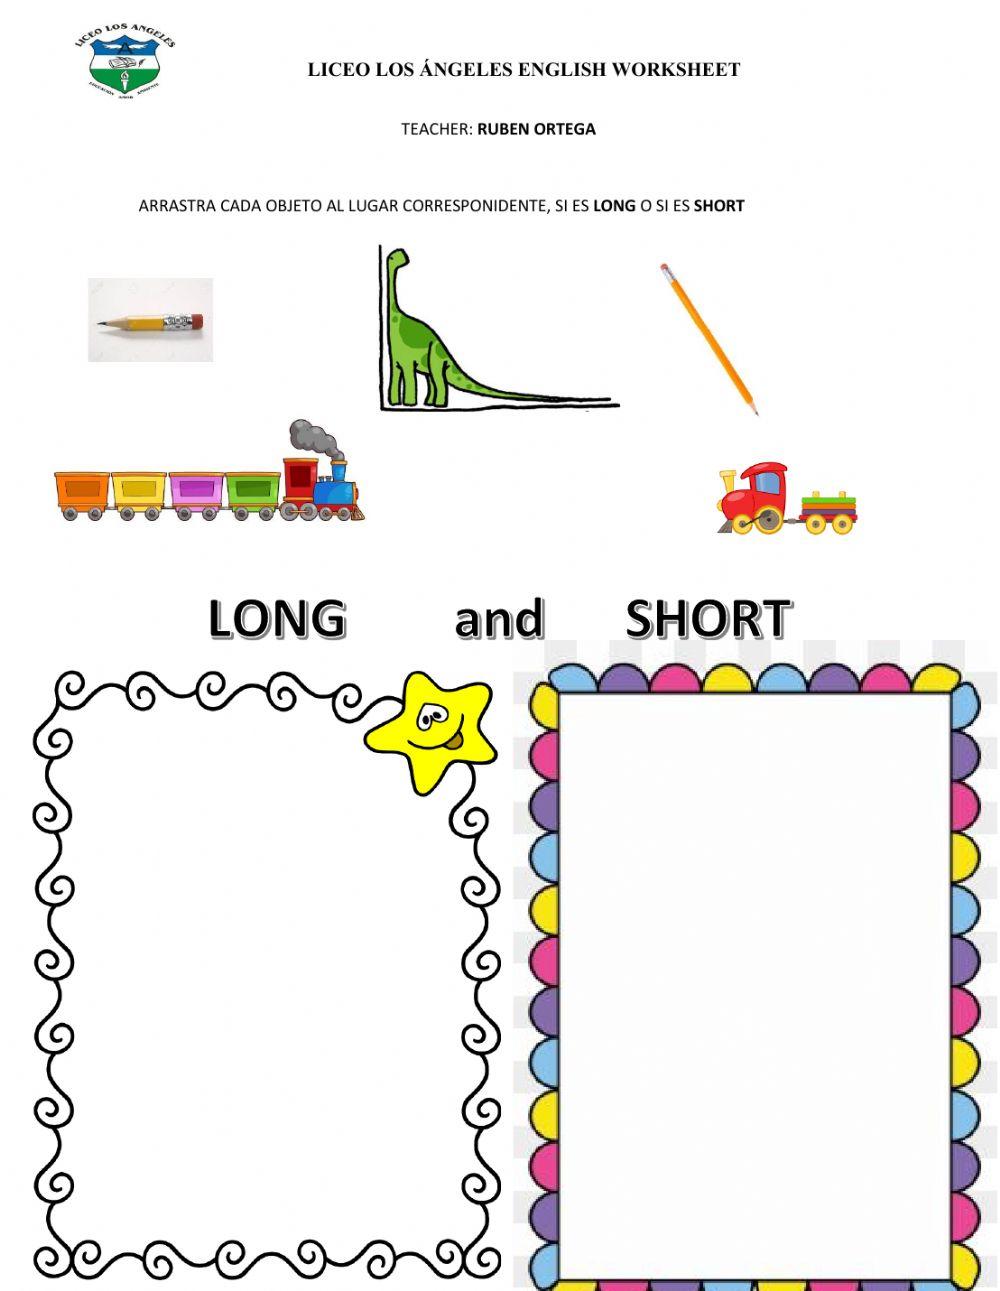 Long and short